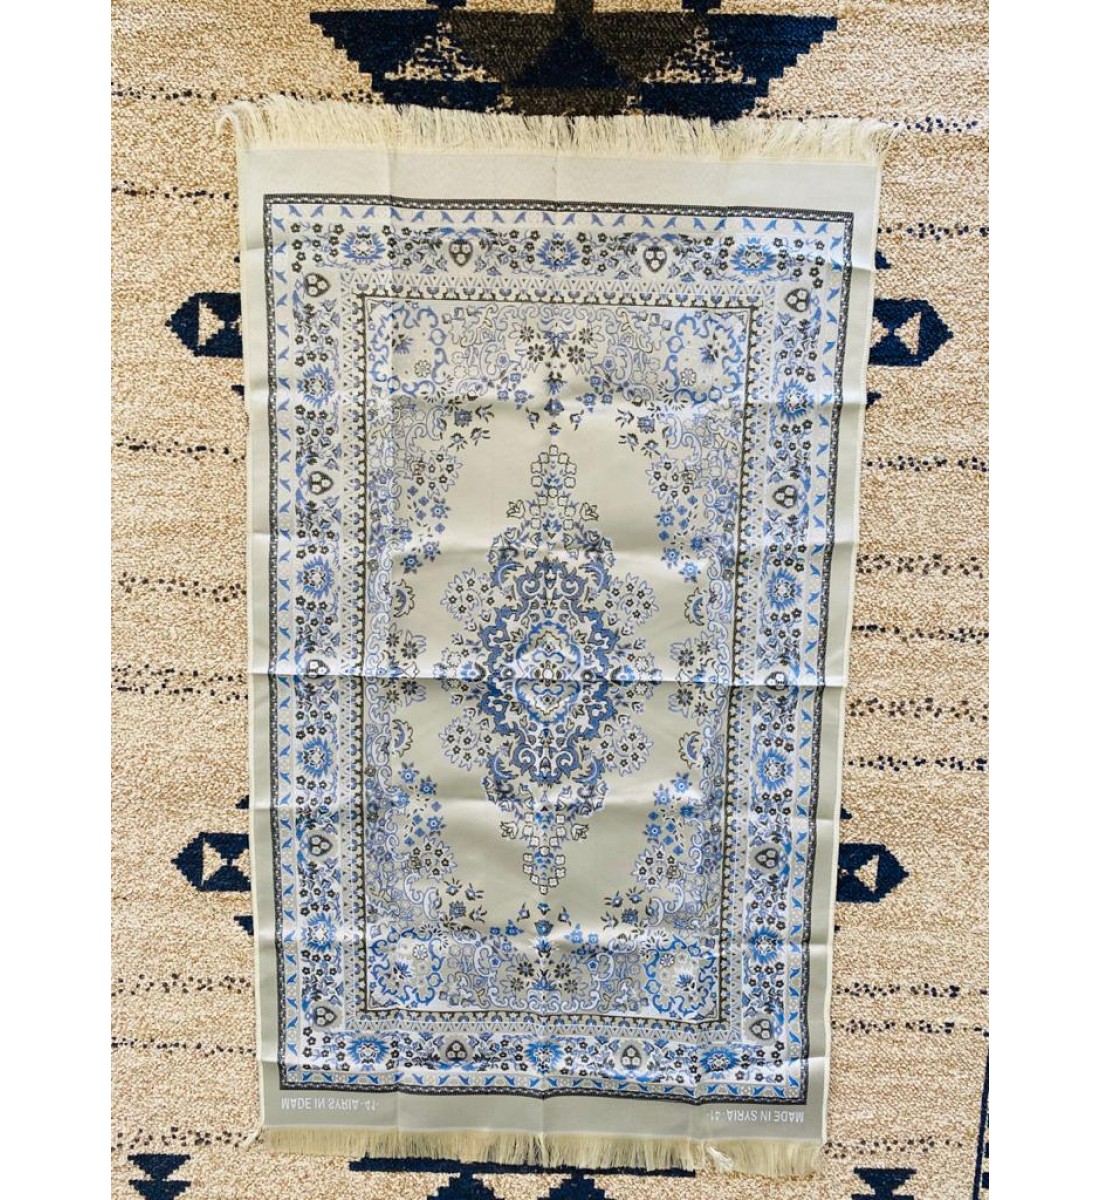 Syrian prayer rugs bag 70 * 110 cm